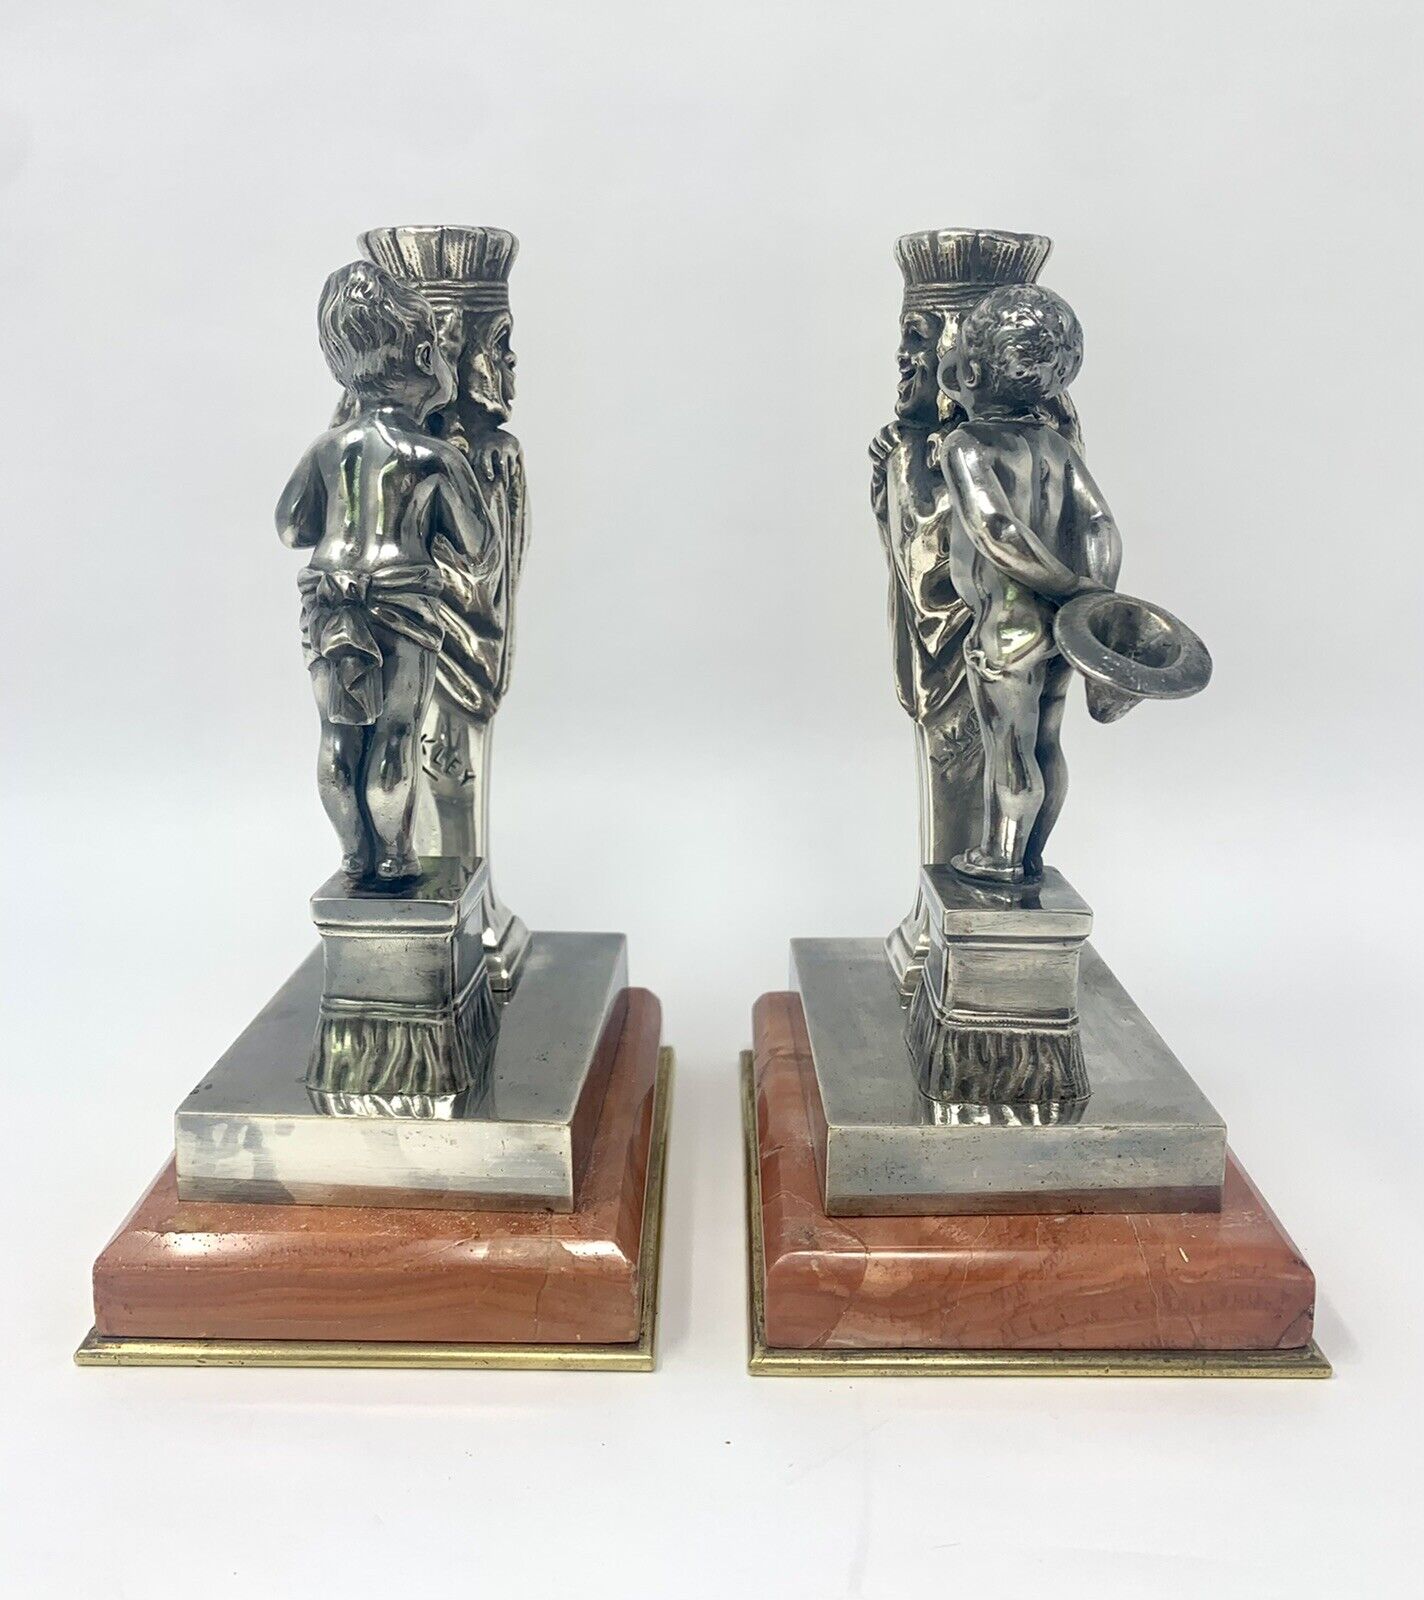  Rare Pair of antique French figural bronze candlesticks by Louis Kley Без бренда - фотография #3